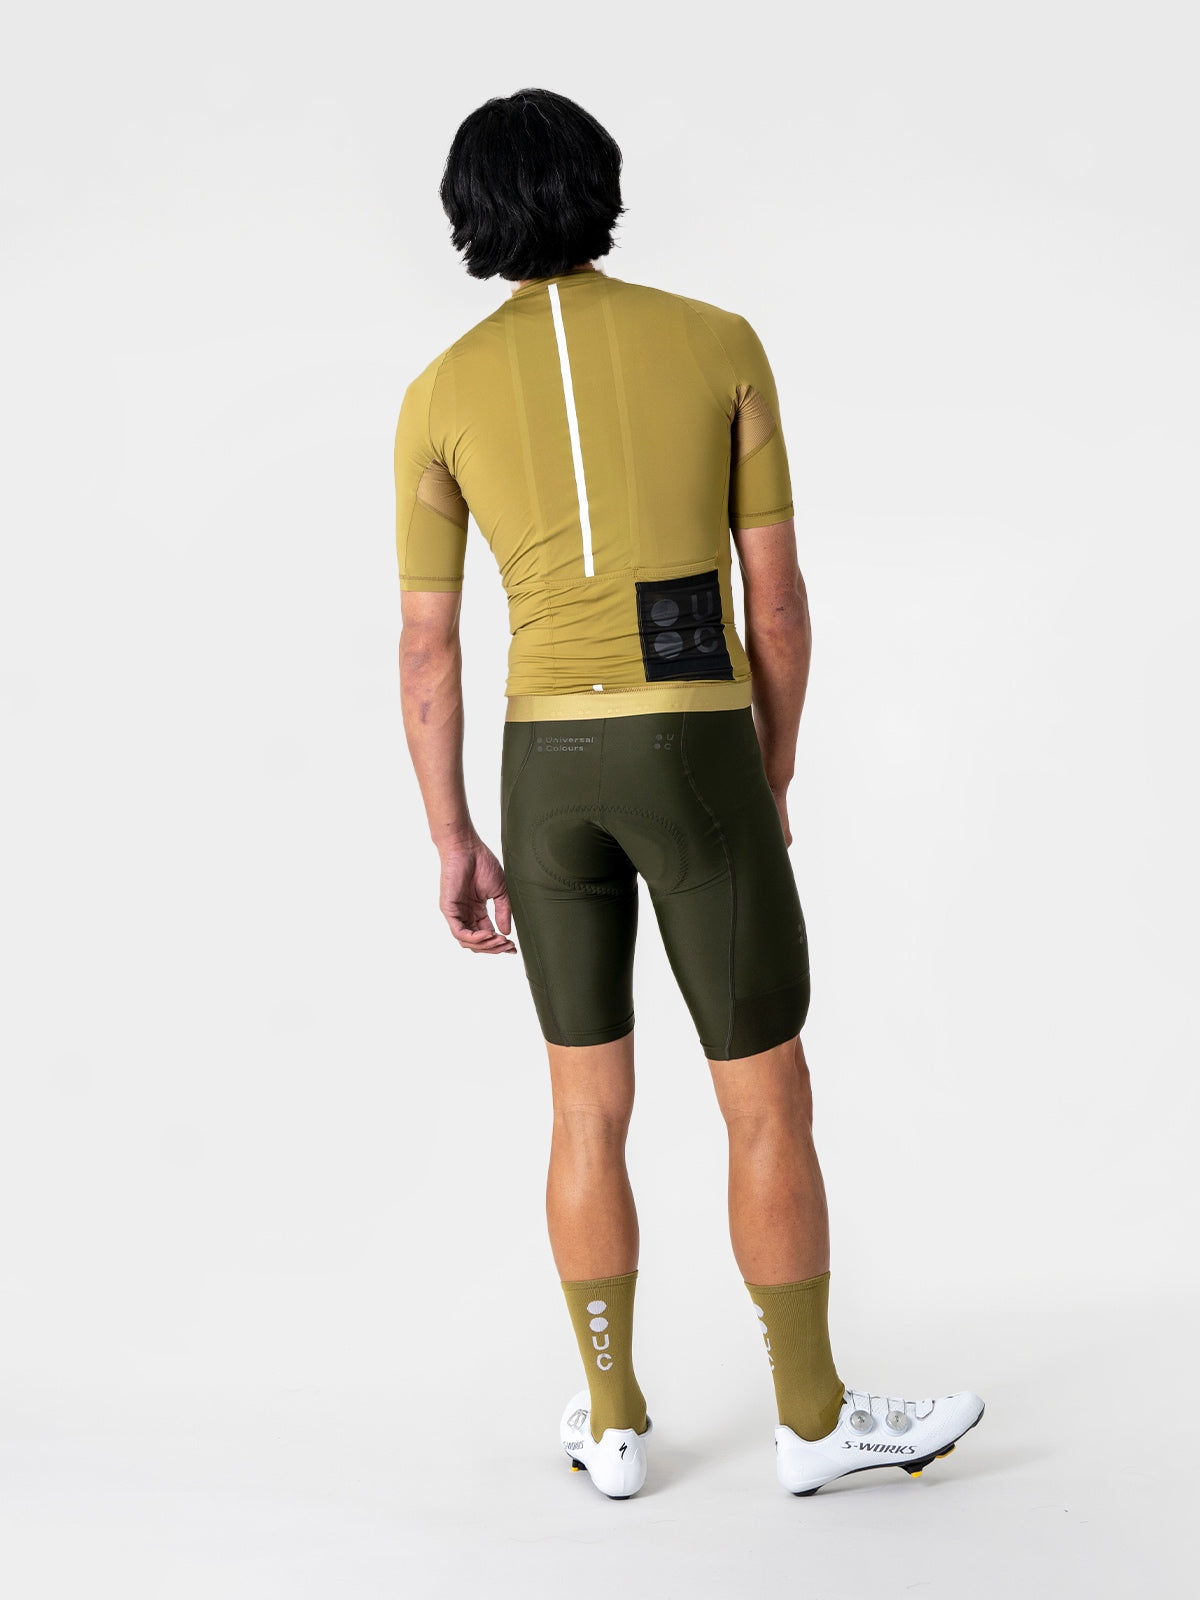 Universal Colours Mono Cycling Jersey - Olive Gold | CYCLISM Manila